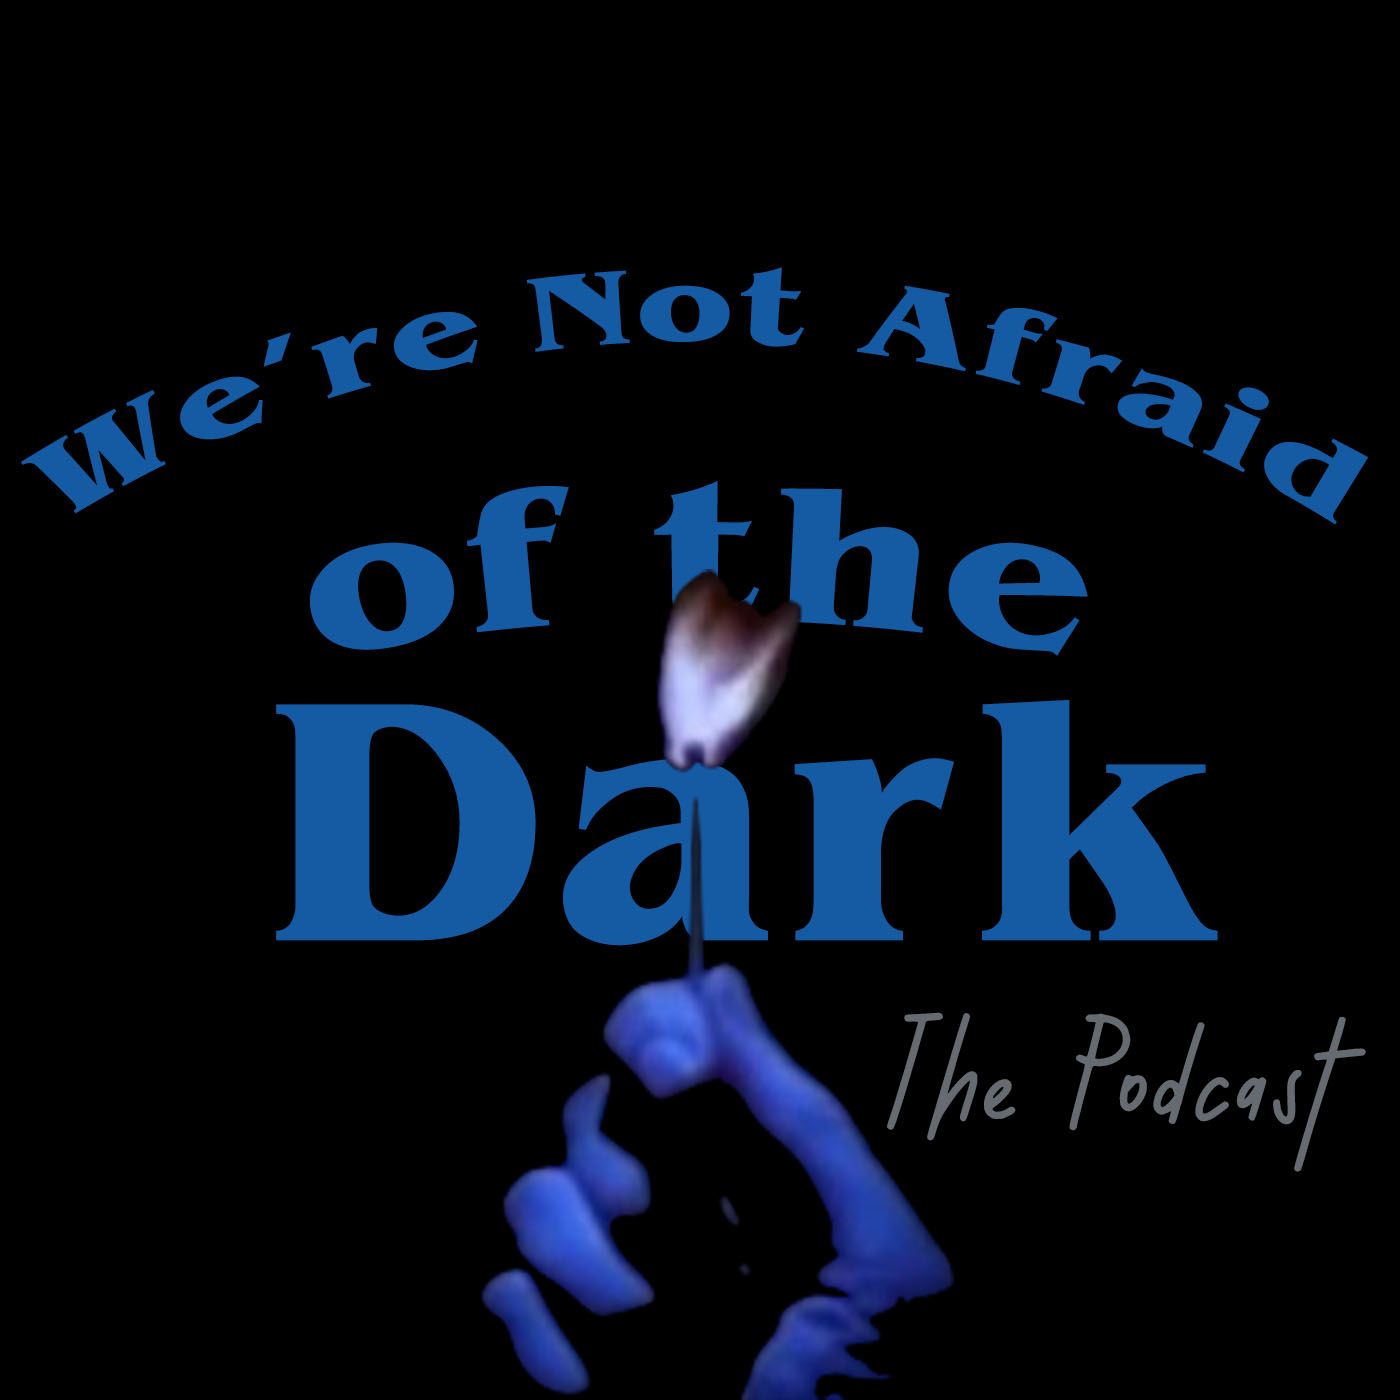 We're Not Afraid of the Dark